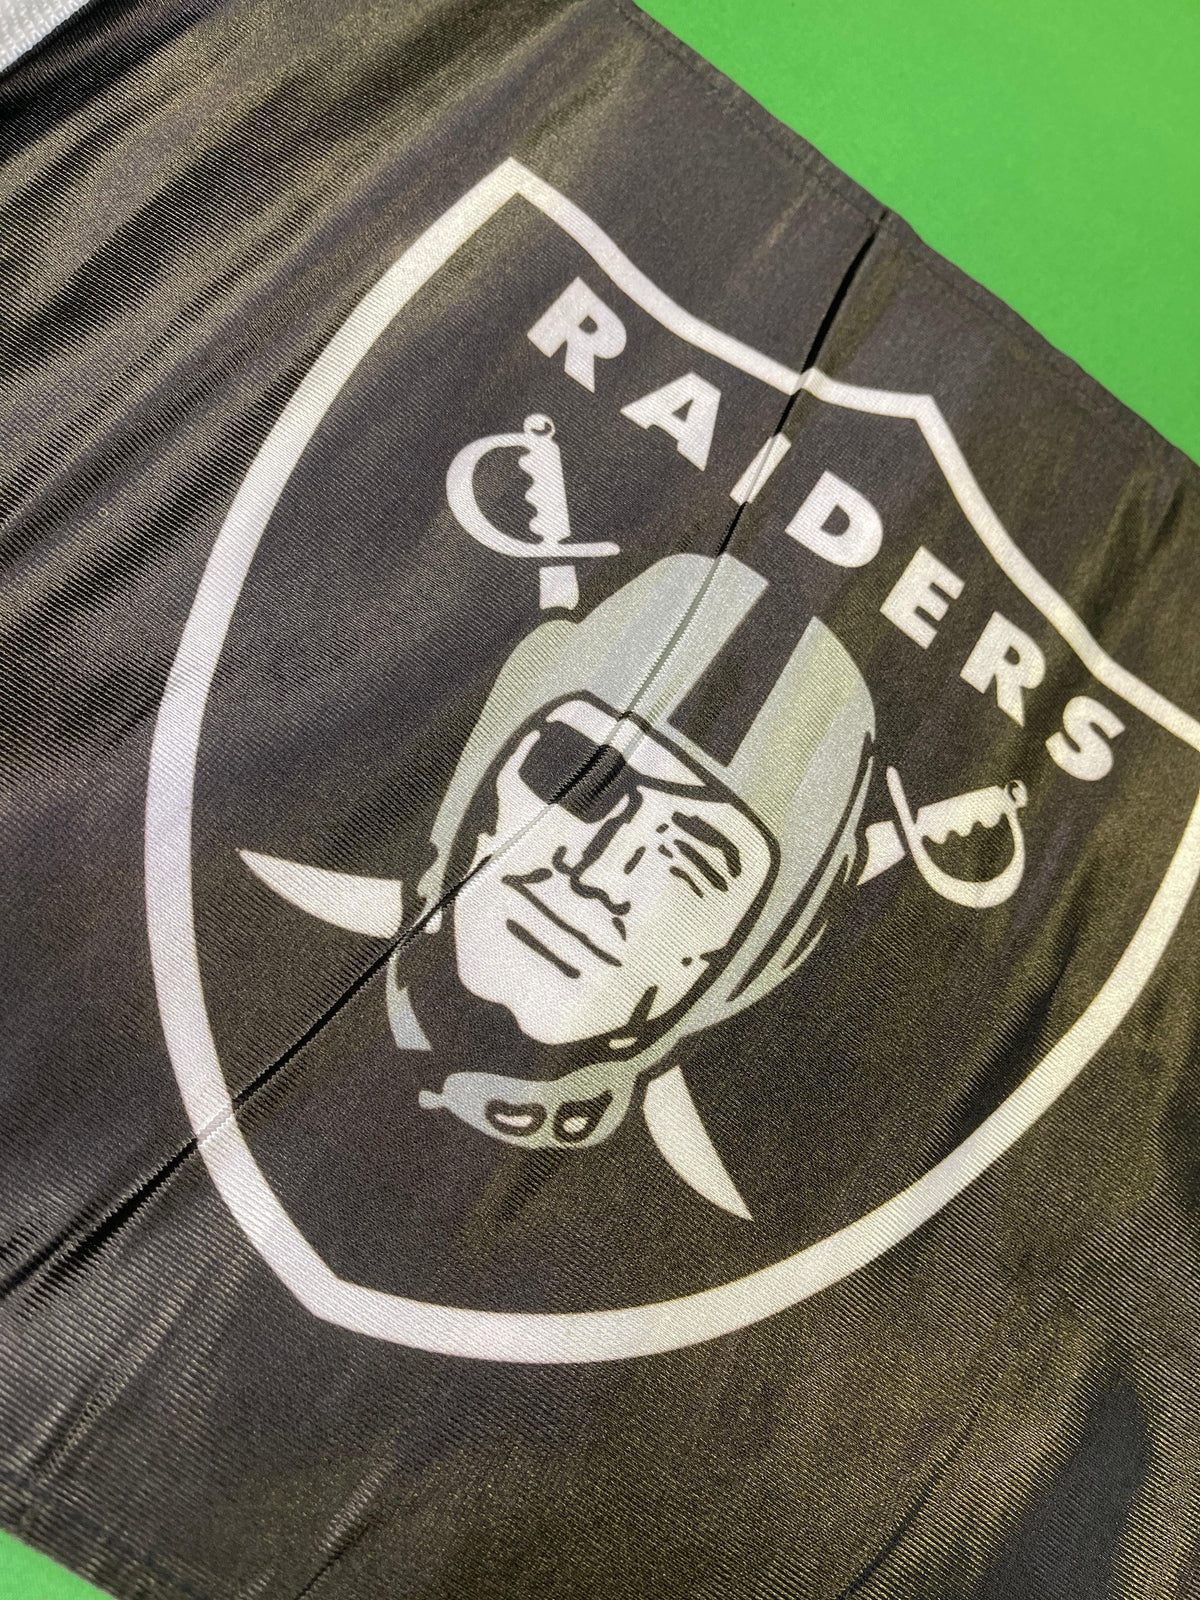 NFL Las Vegas Raiders Double-Sided Car Flag NWT